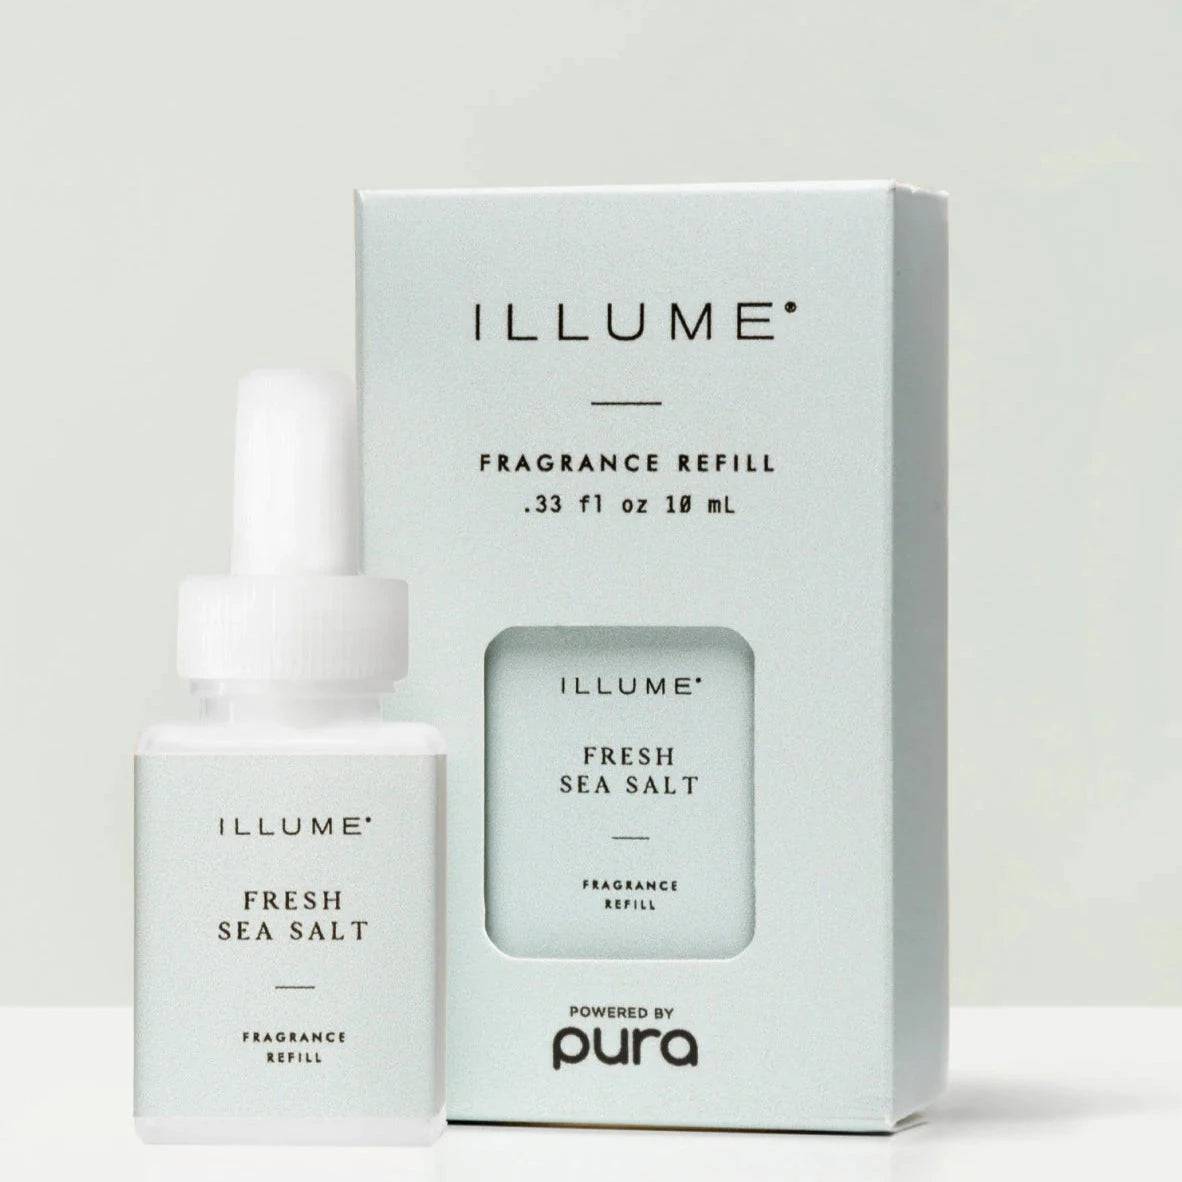 Fresh Sea Salt Pura Fragrance Refill By Illume - The Preppy Bunny